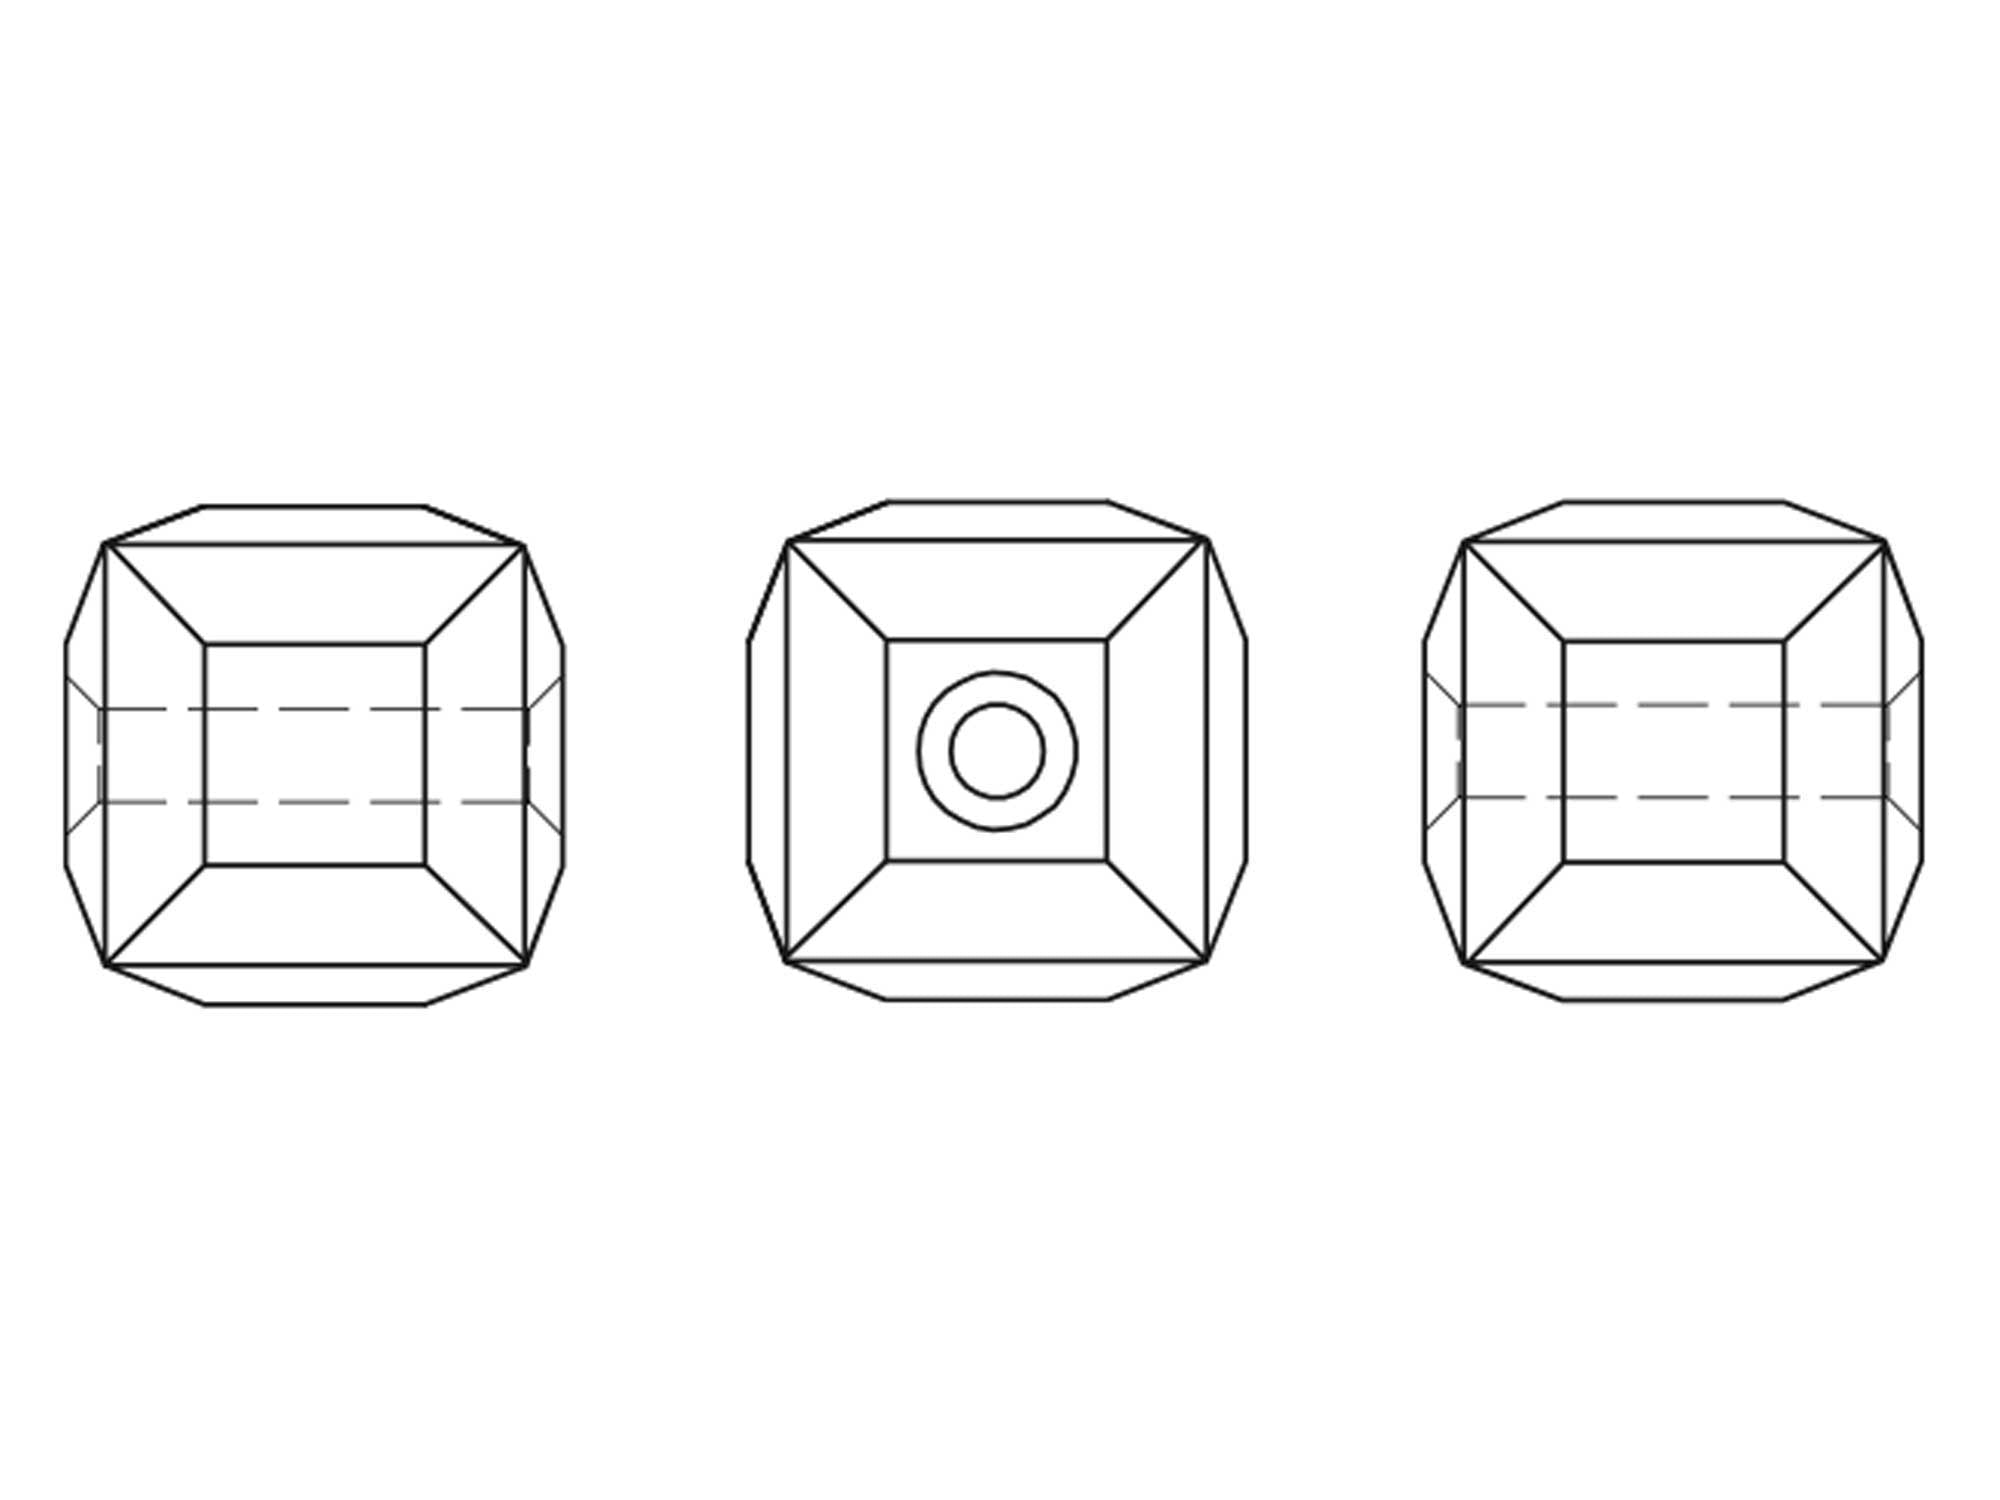 Swarovski Art.# 5601 - 8mm Topaz AB coated Crystal Cube Beads, 12pcs